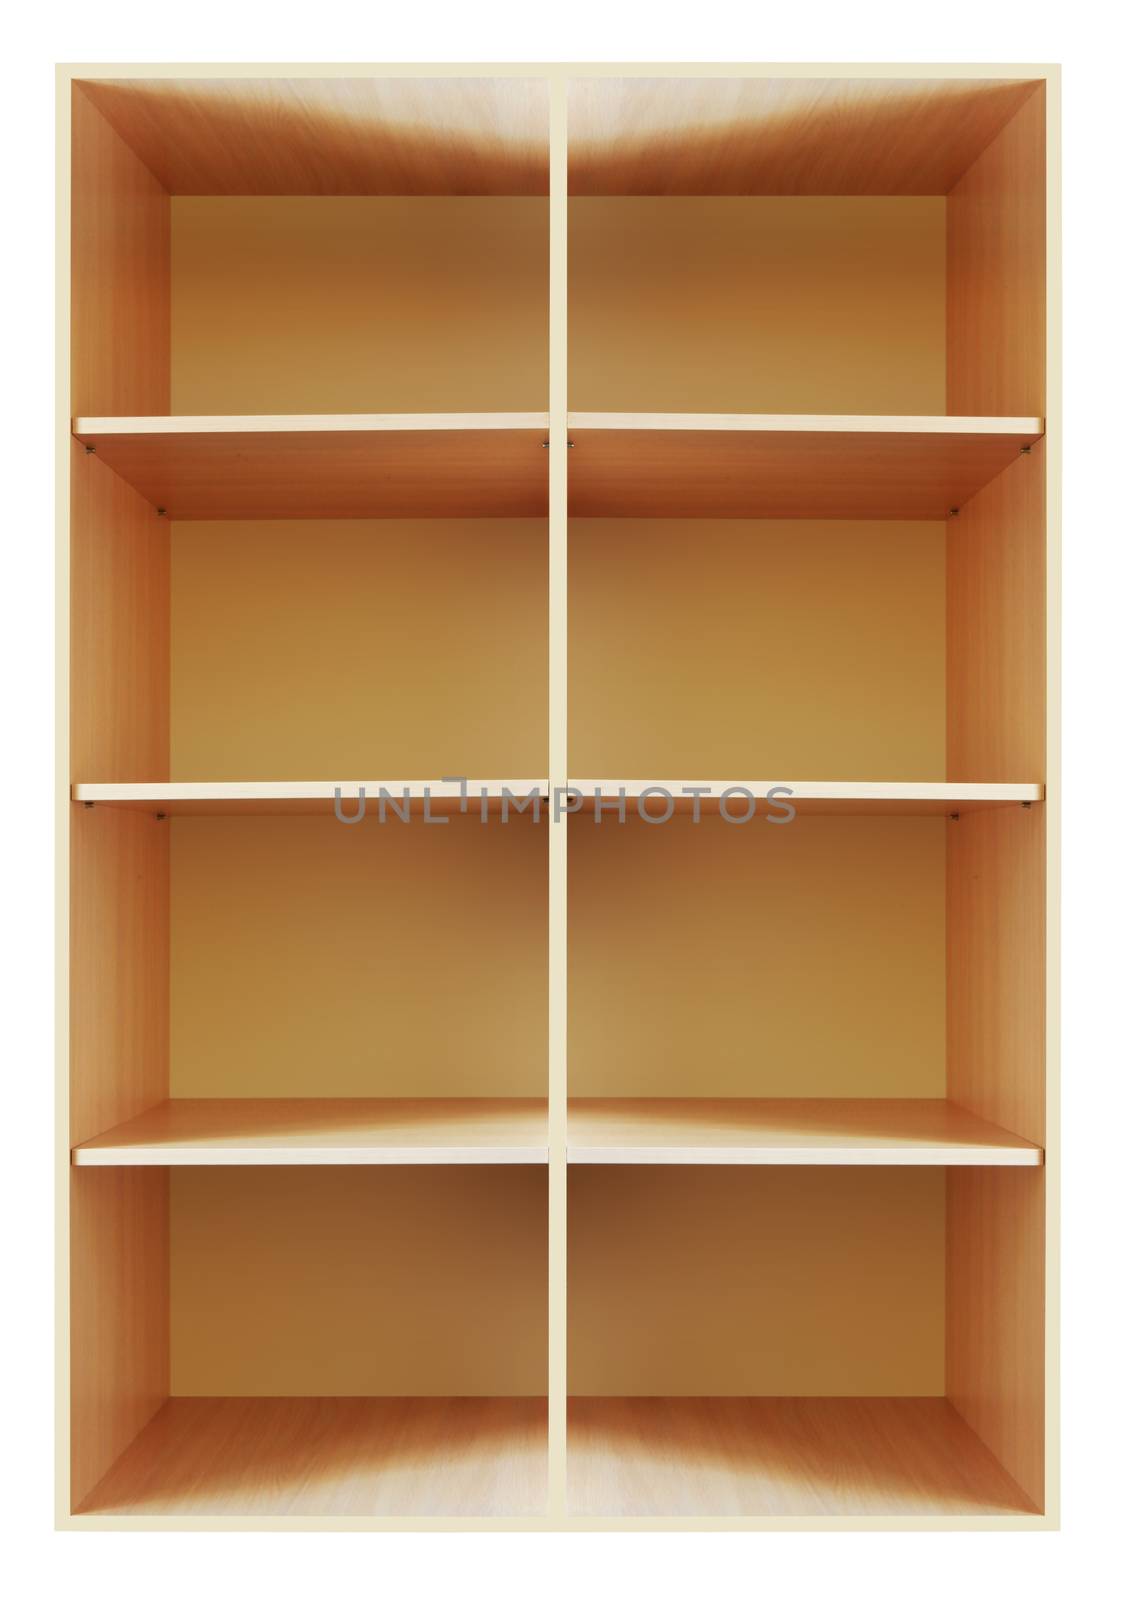 Blank wooden bookshelf by ssuaphoto